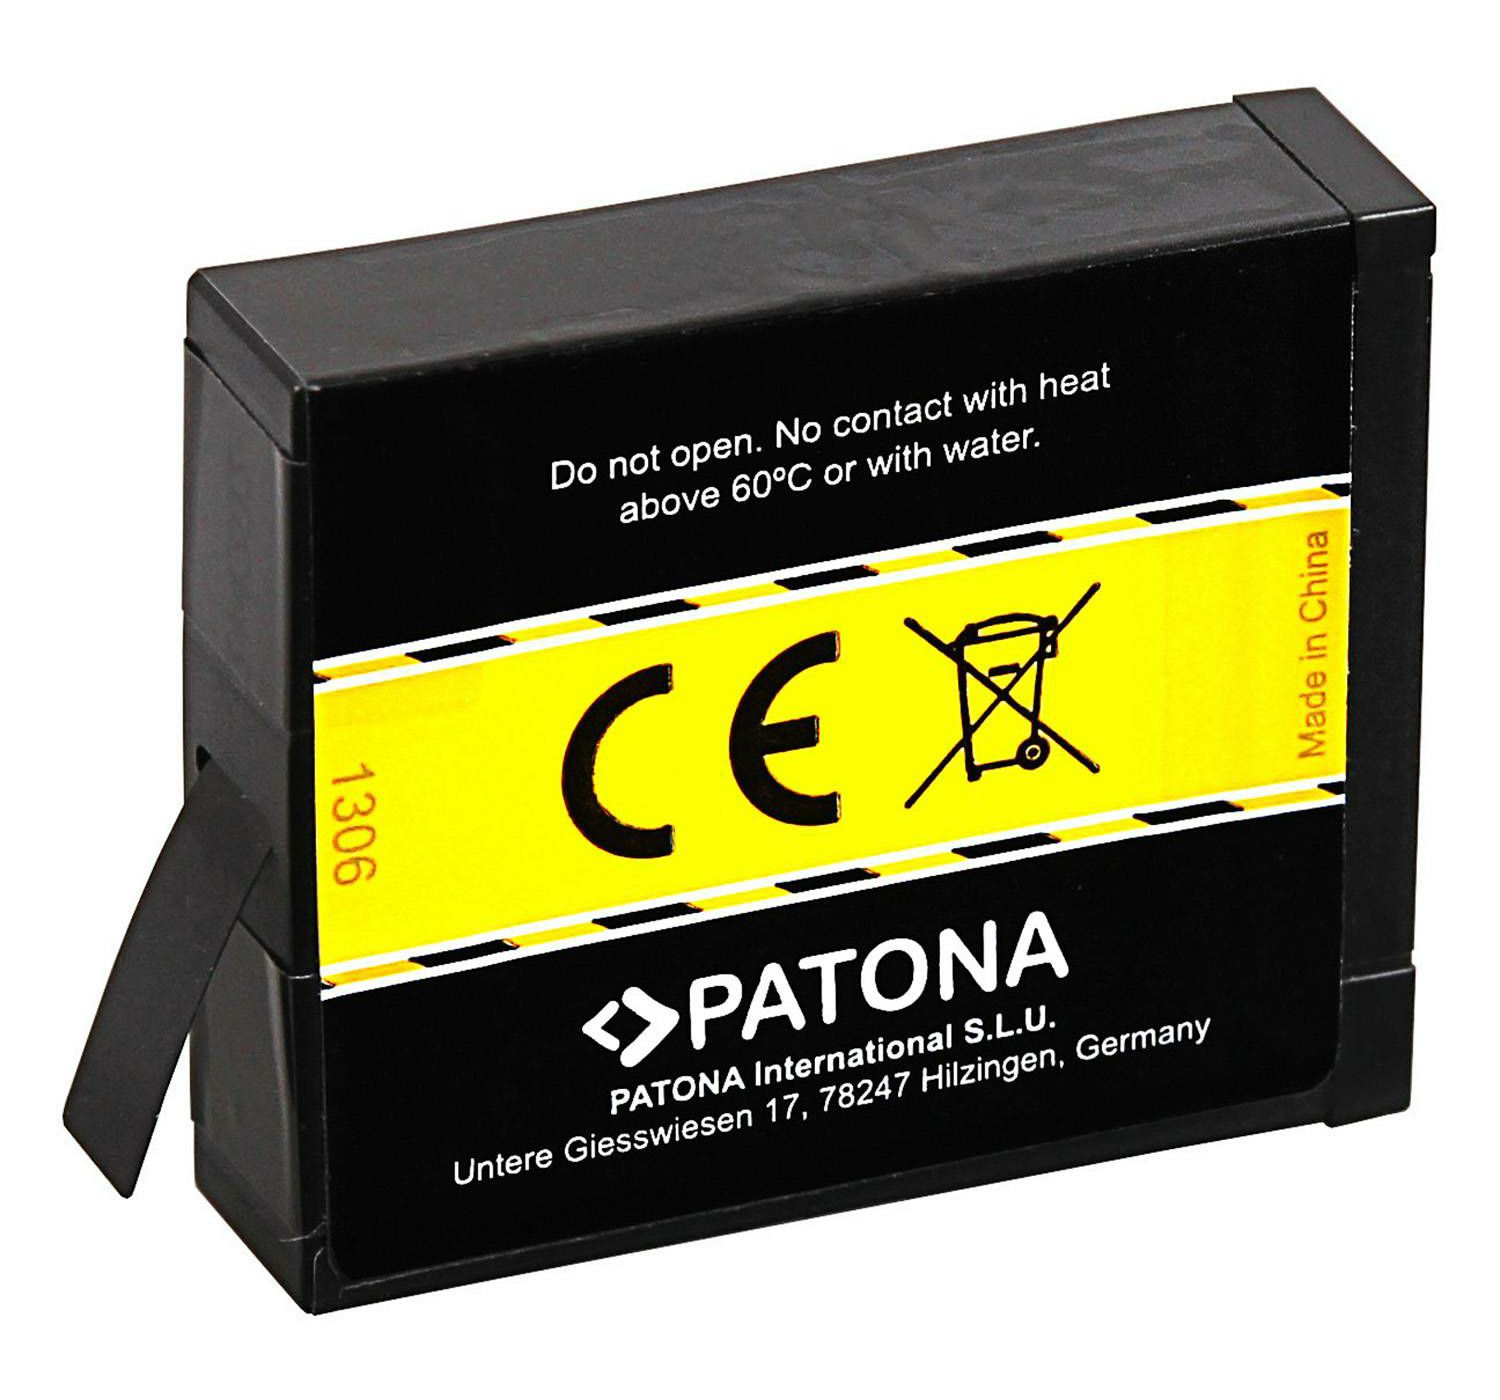 Patona baterija za Insta360 One X Action Cam 1150mAh 4.4Wh 3.8V